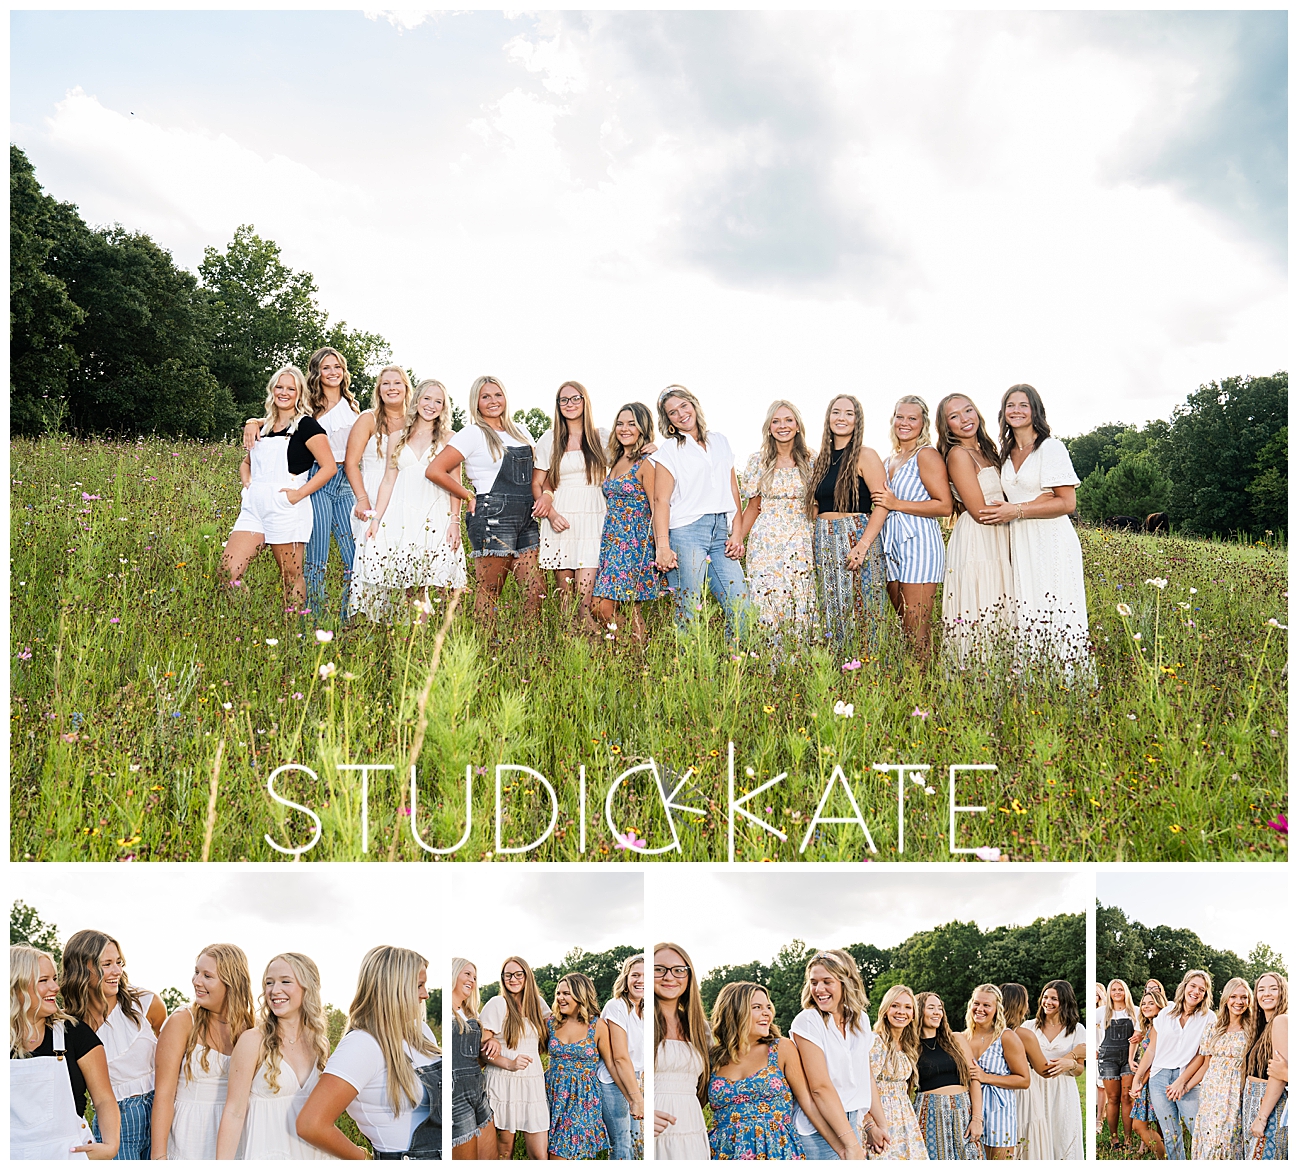 Wildflower senior team photoshoot, styled senior shoot, Rhyne Farms, Wildflower hill, southern senior photoshoot inspiration
